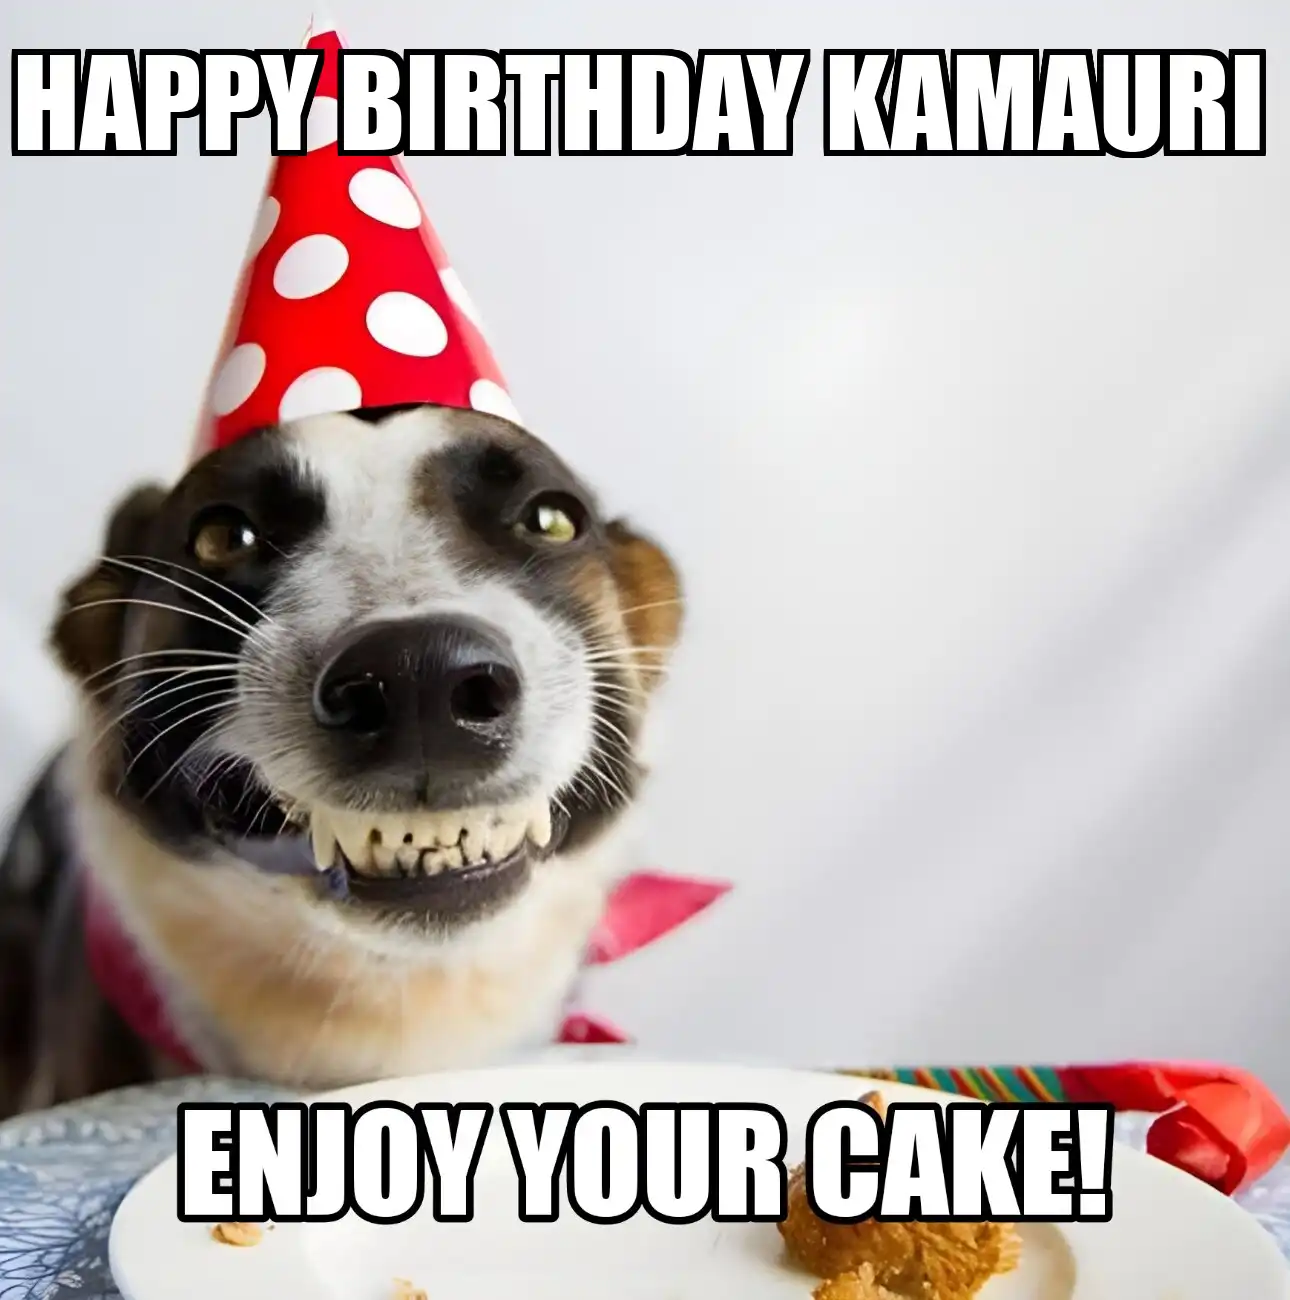 Happy Birthday Kamauri Enjoy Your Cake Dog Meme